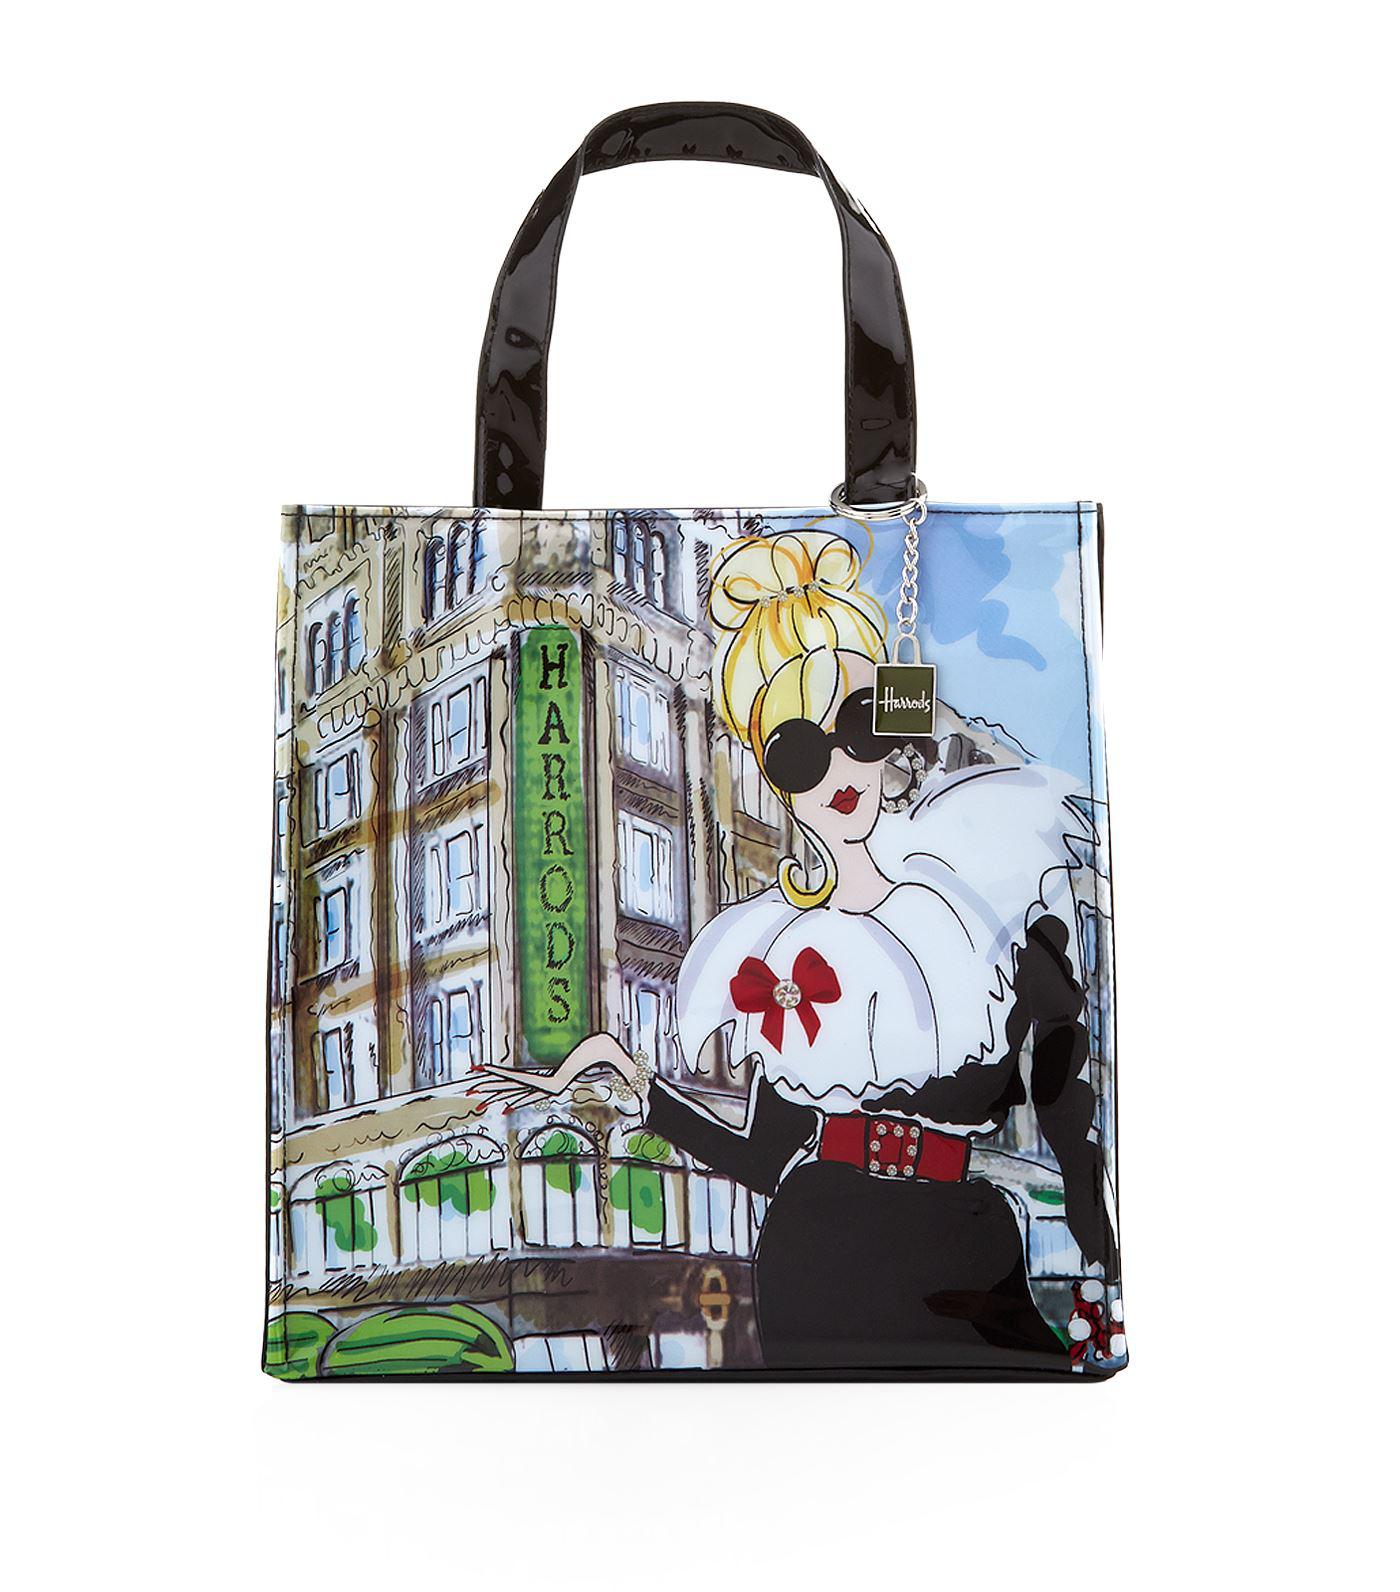 Harrods Small Glamorous Girls Shopper Bag in Grey - Lyst